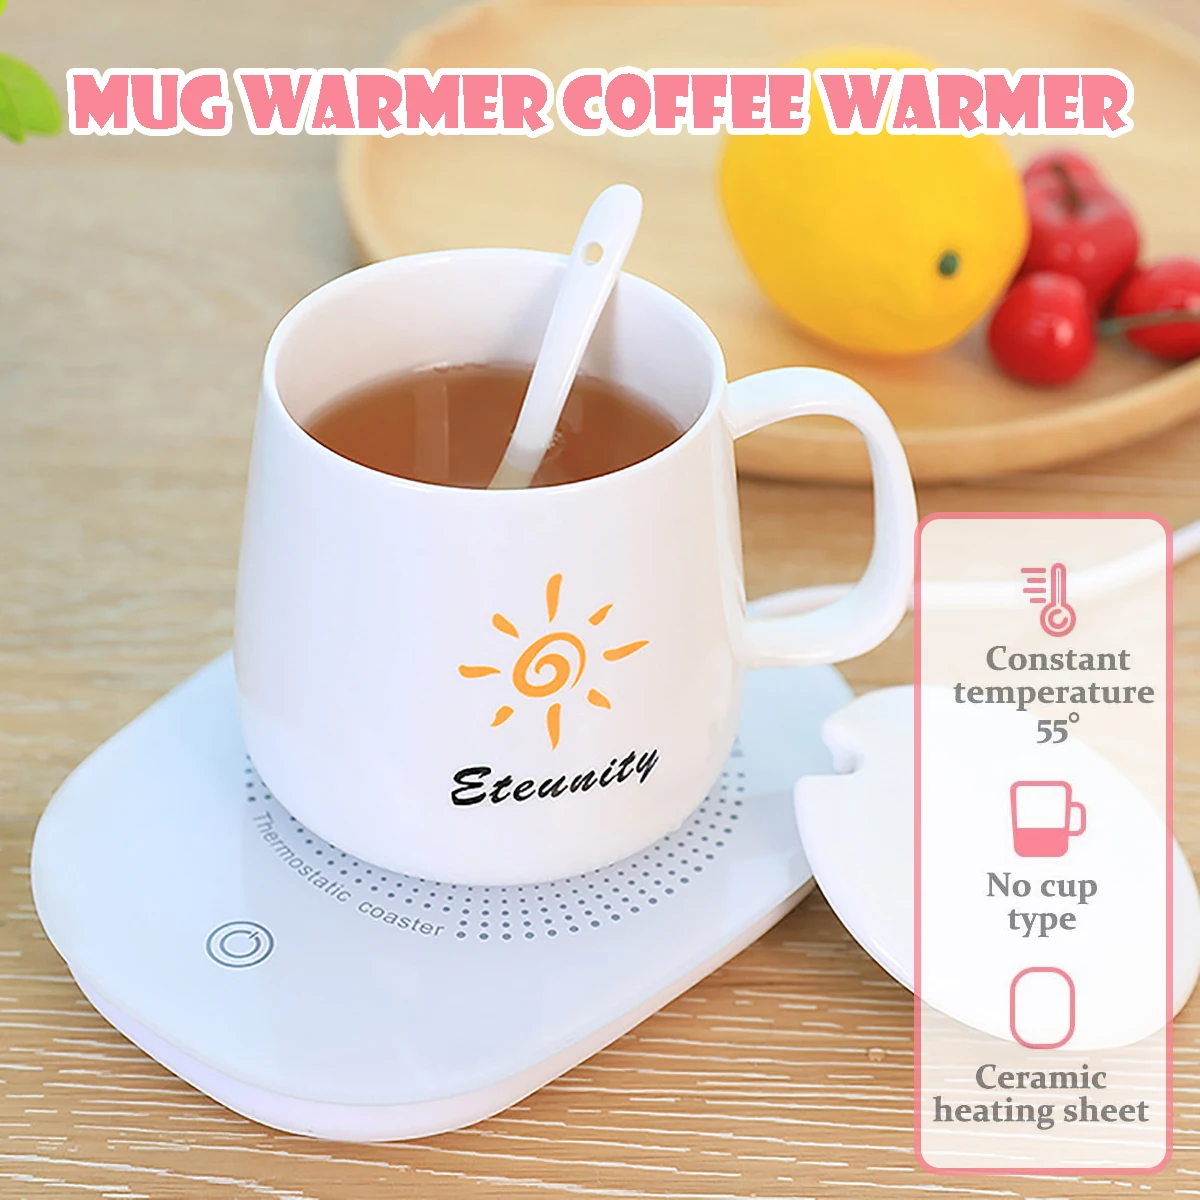 Electric Coffee Mug Warmer Heating Plate Tea Milk Cup Heater Pad Popular S8I1 